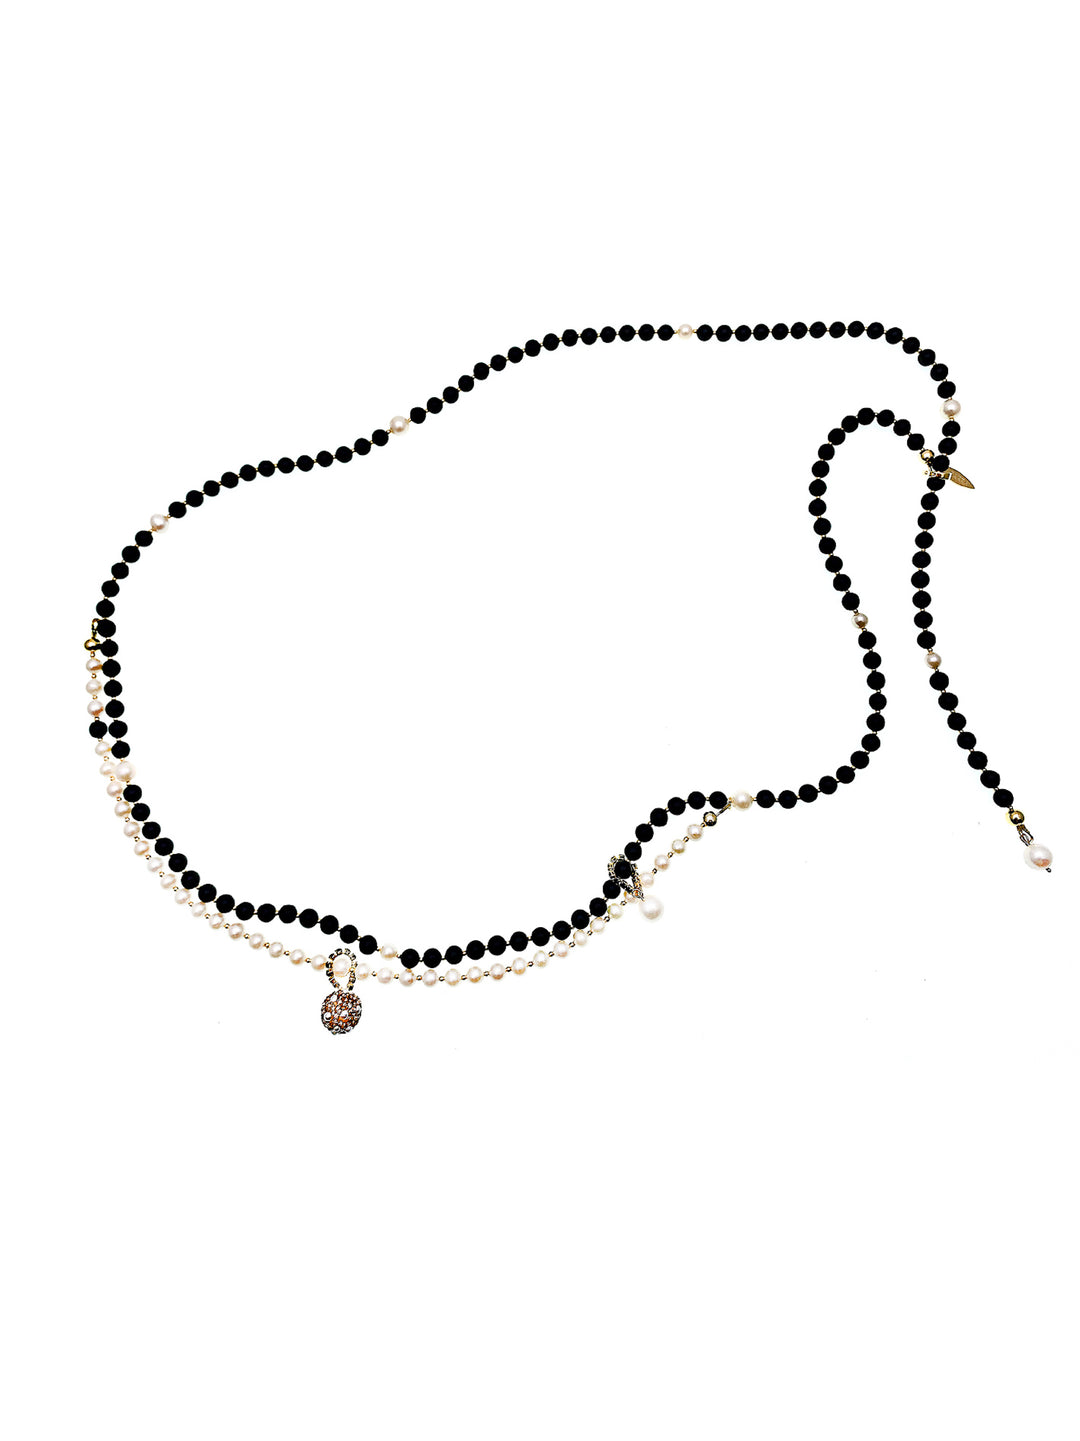 Black Obsidian With Freshwater Pearls Necklace / Waist Belt FN021 - FARRA